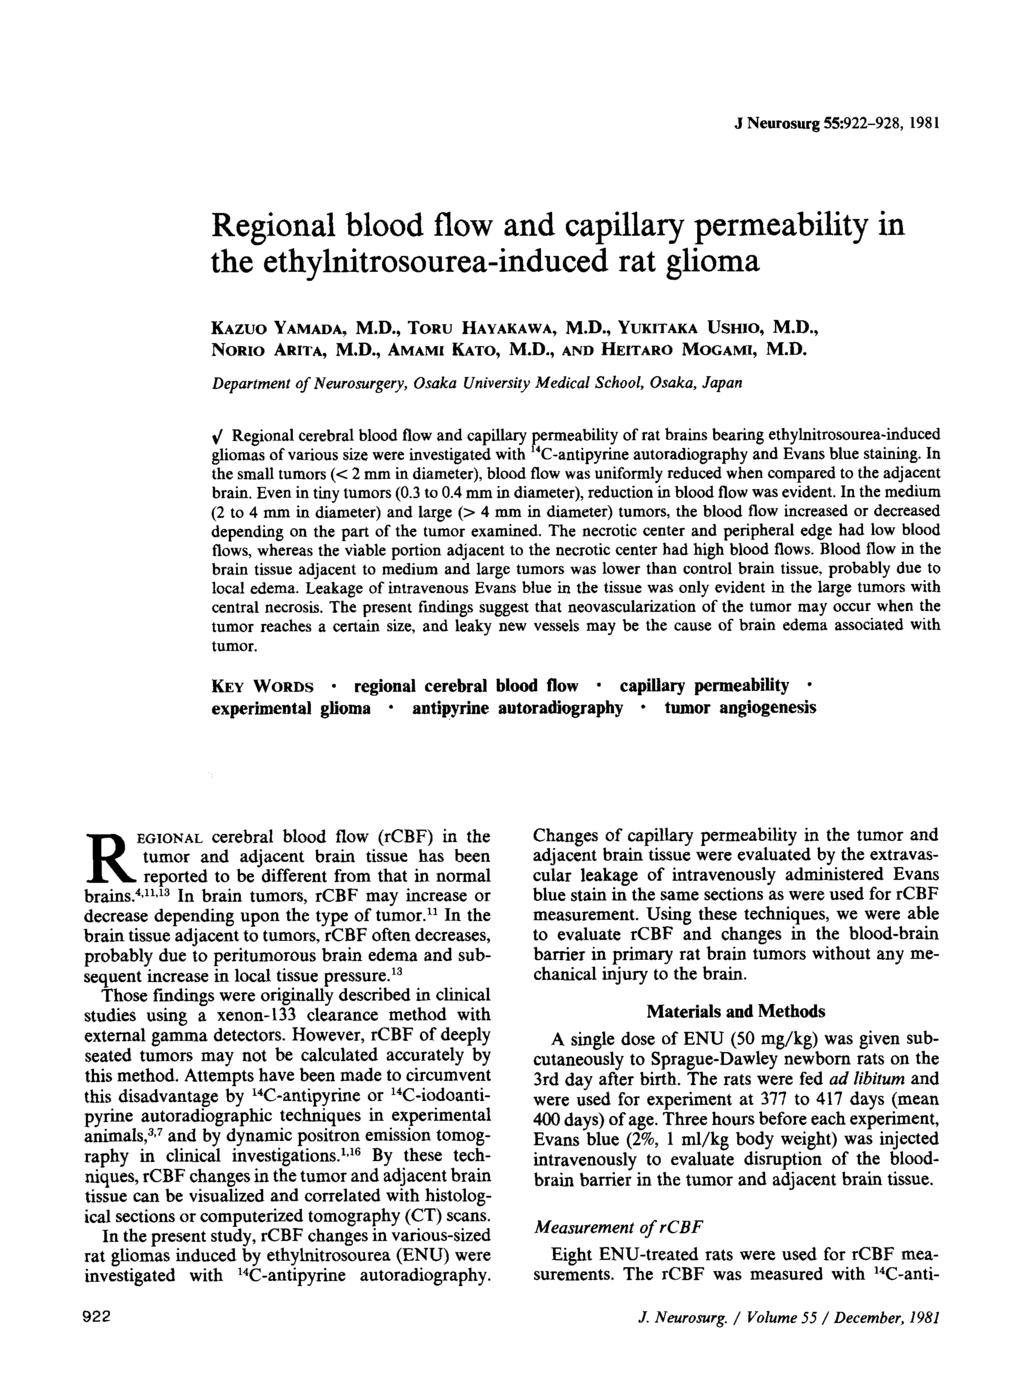 J Neurosurg 55:922-928, 1981 Regional blood flow and capillary permeability in the ethylnitrosourea-induced rat glioma KAZUO YAMADA, M.D., TORU HAYAKAWA, M.D., YUKITAKA USHIO, M.D., NORIO ARITA, M.D., AMAMI KATO, M.